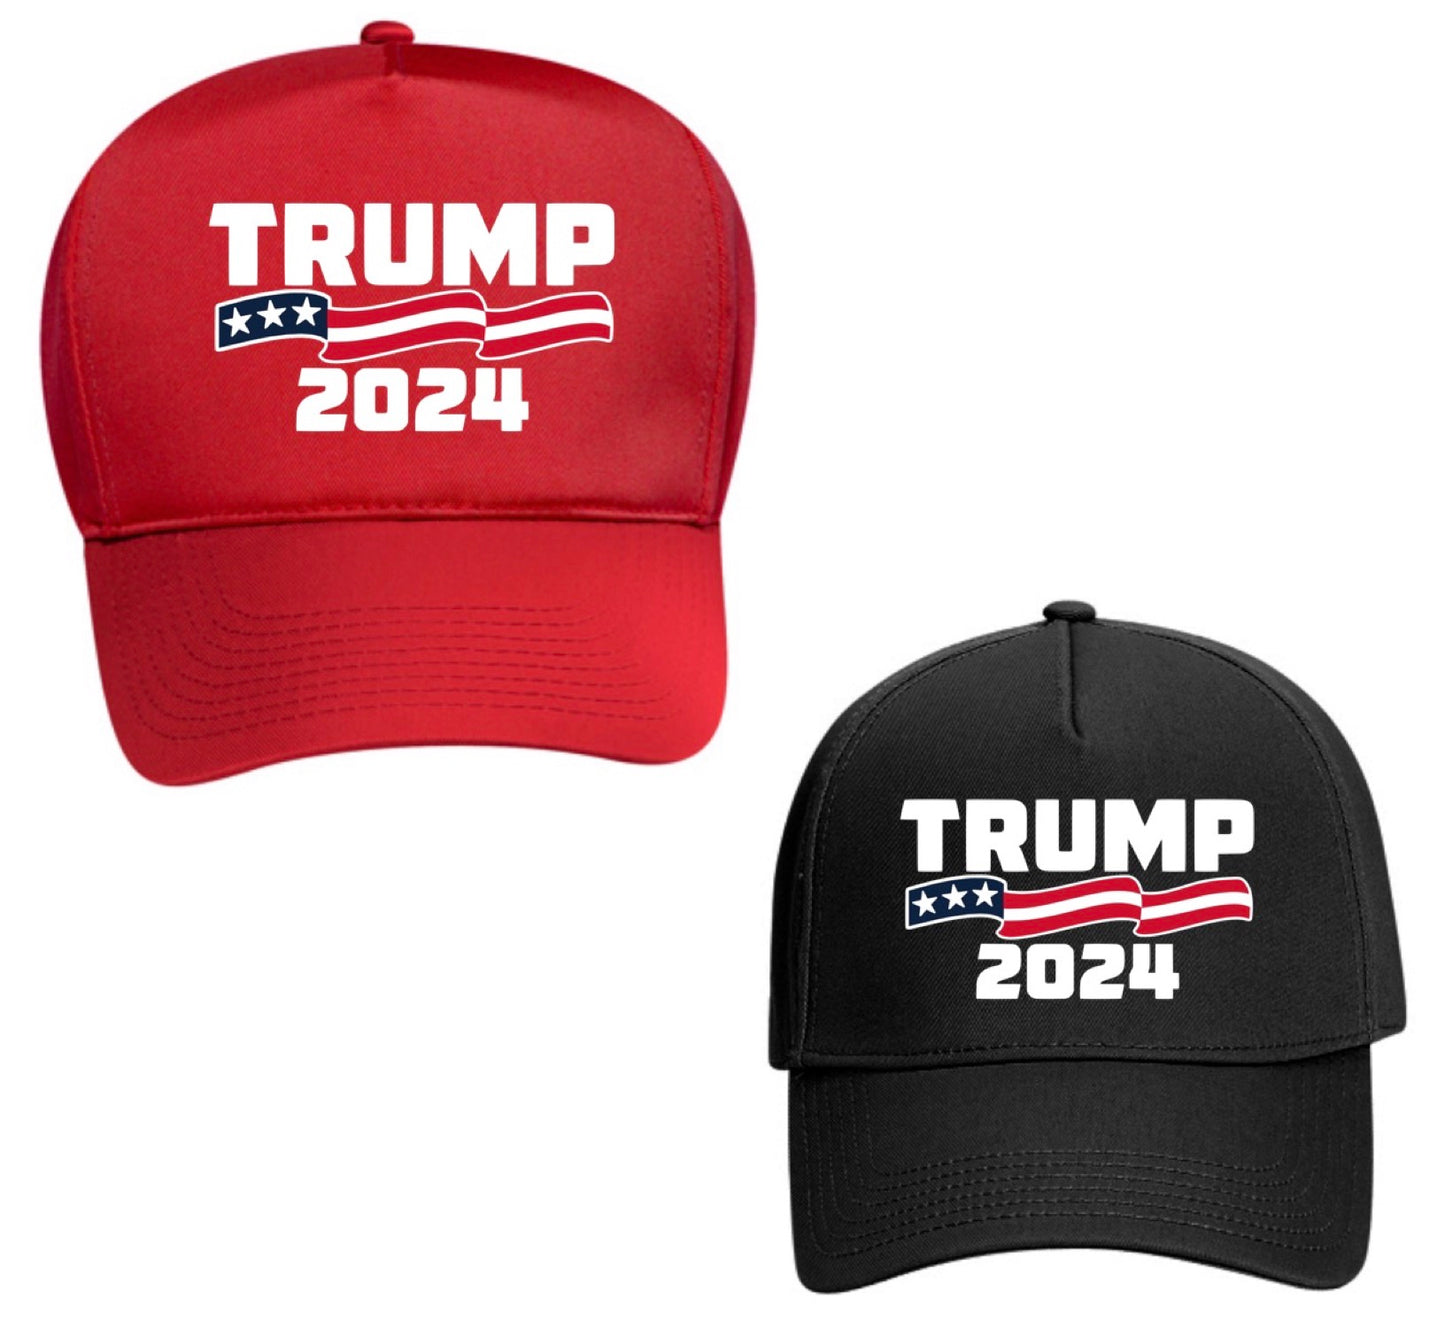 Buy 1 Get 1 Free — Trump 2024 Hat (FREE Shipping)